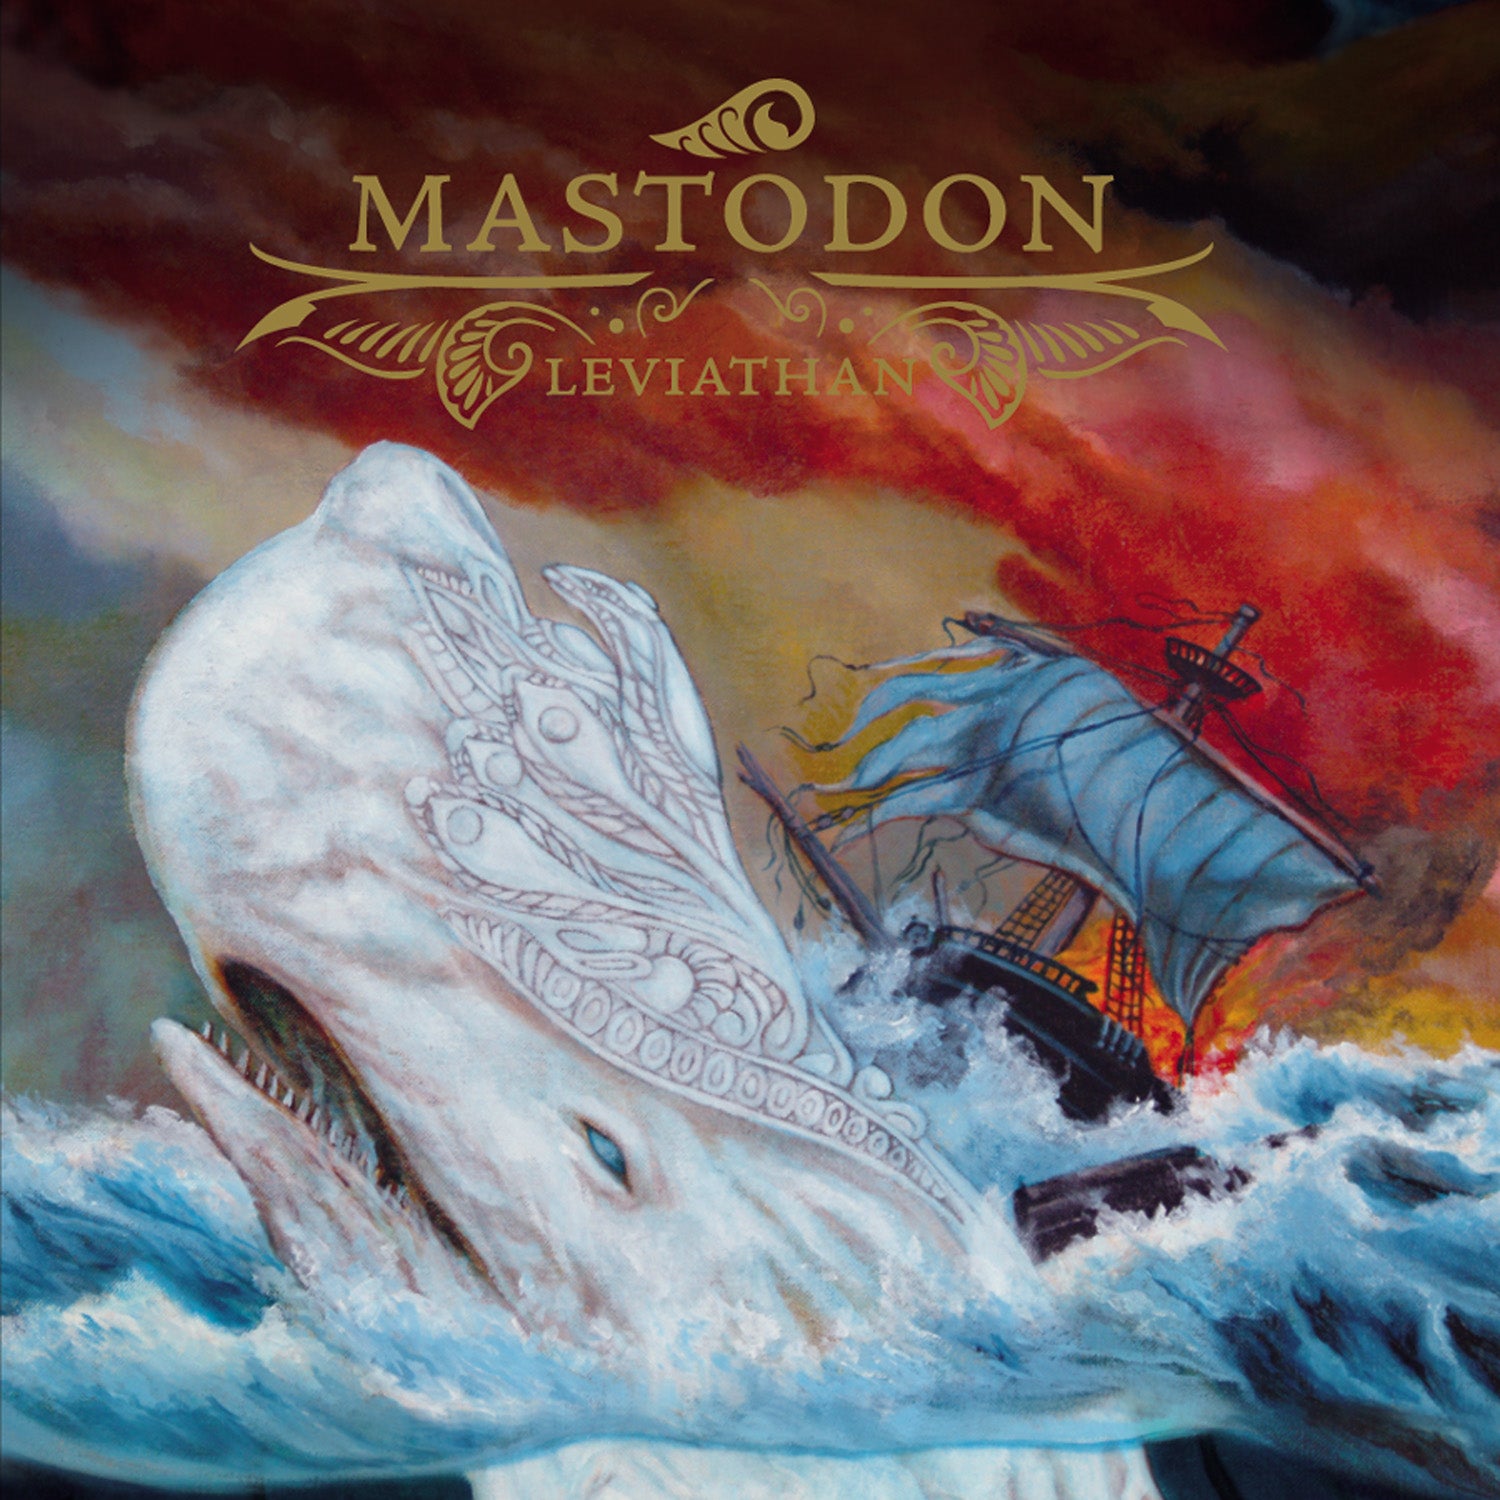 Mastodon "Leviathan" CD